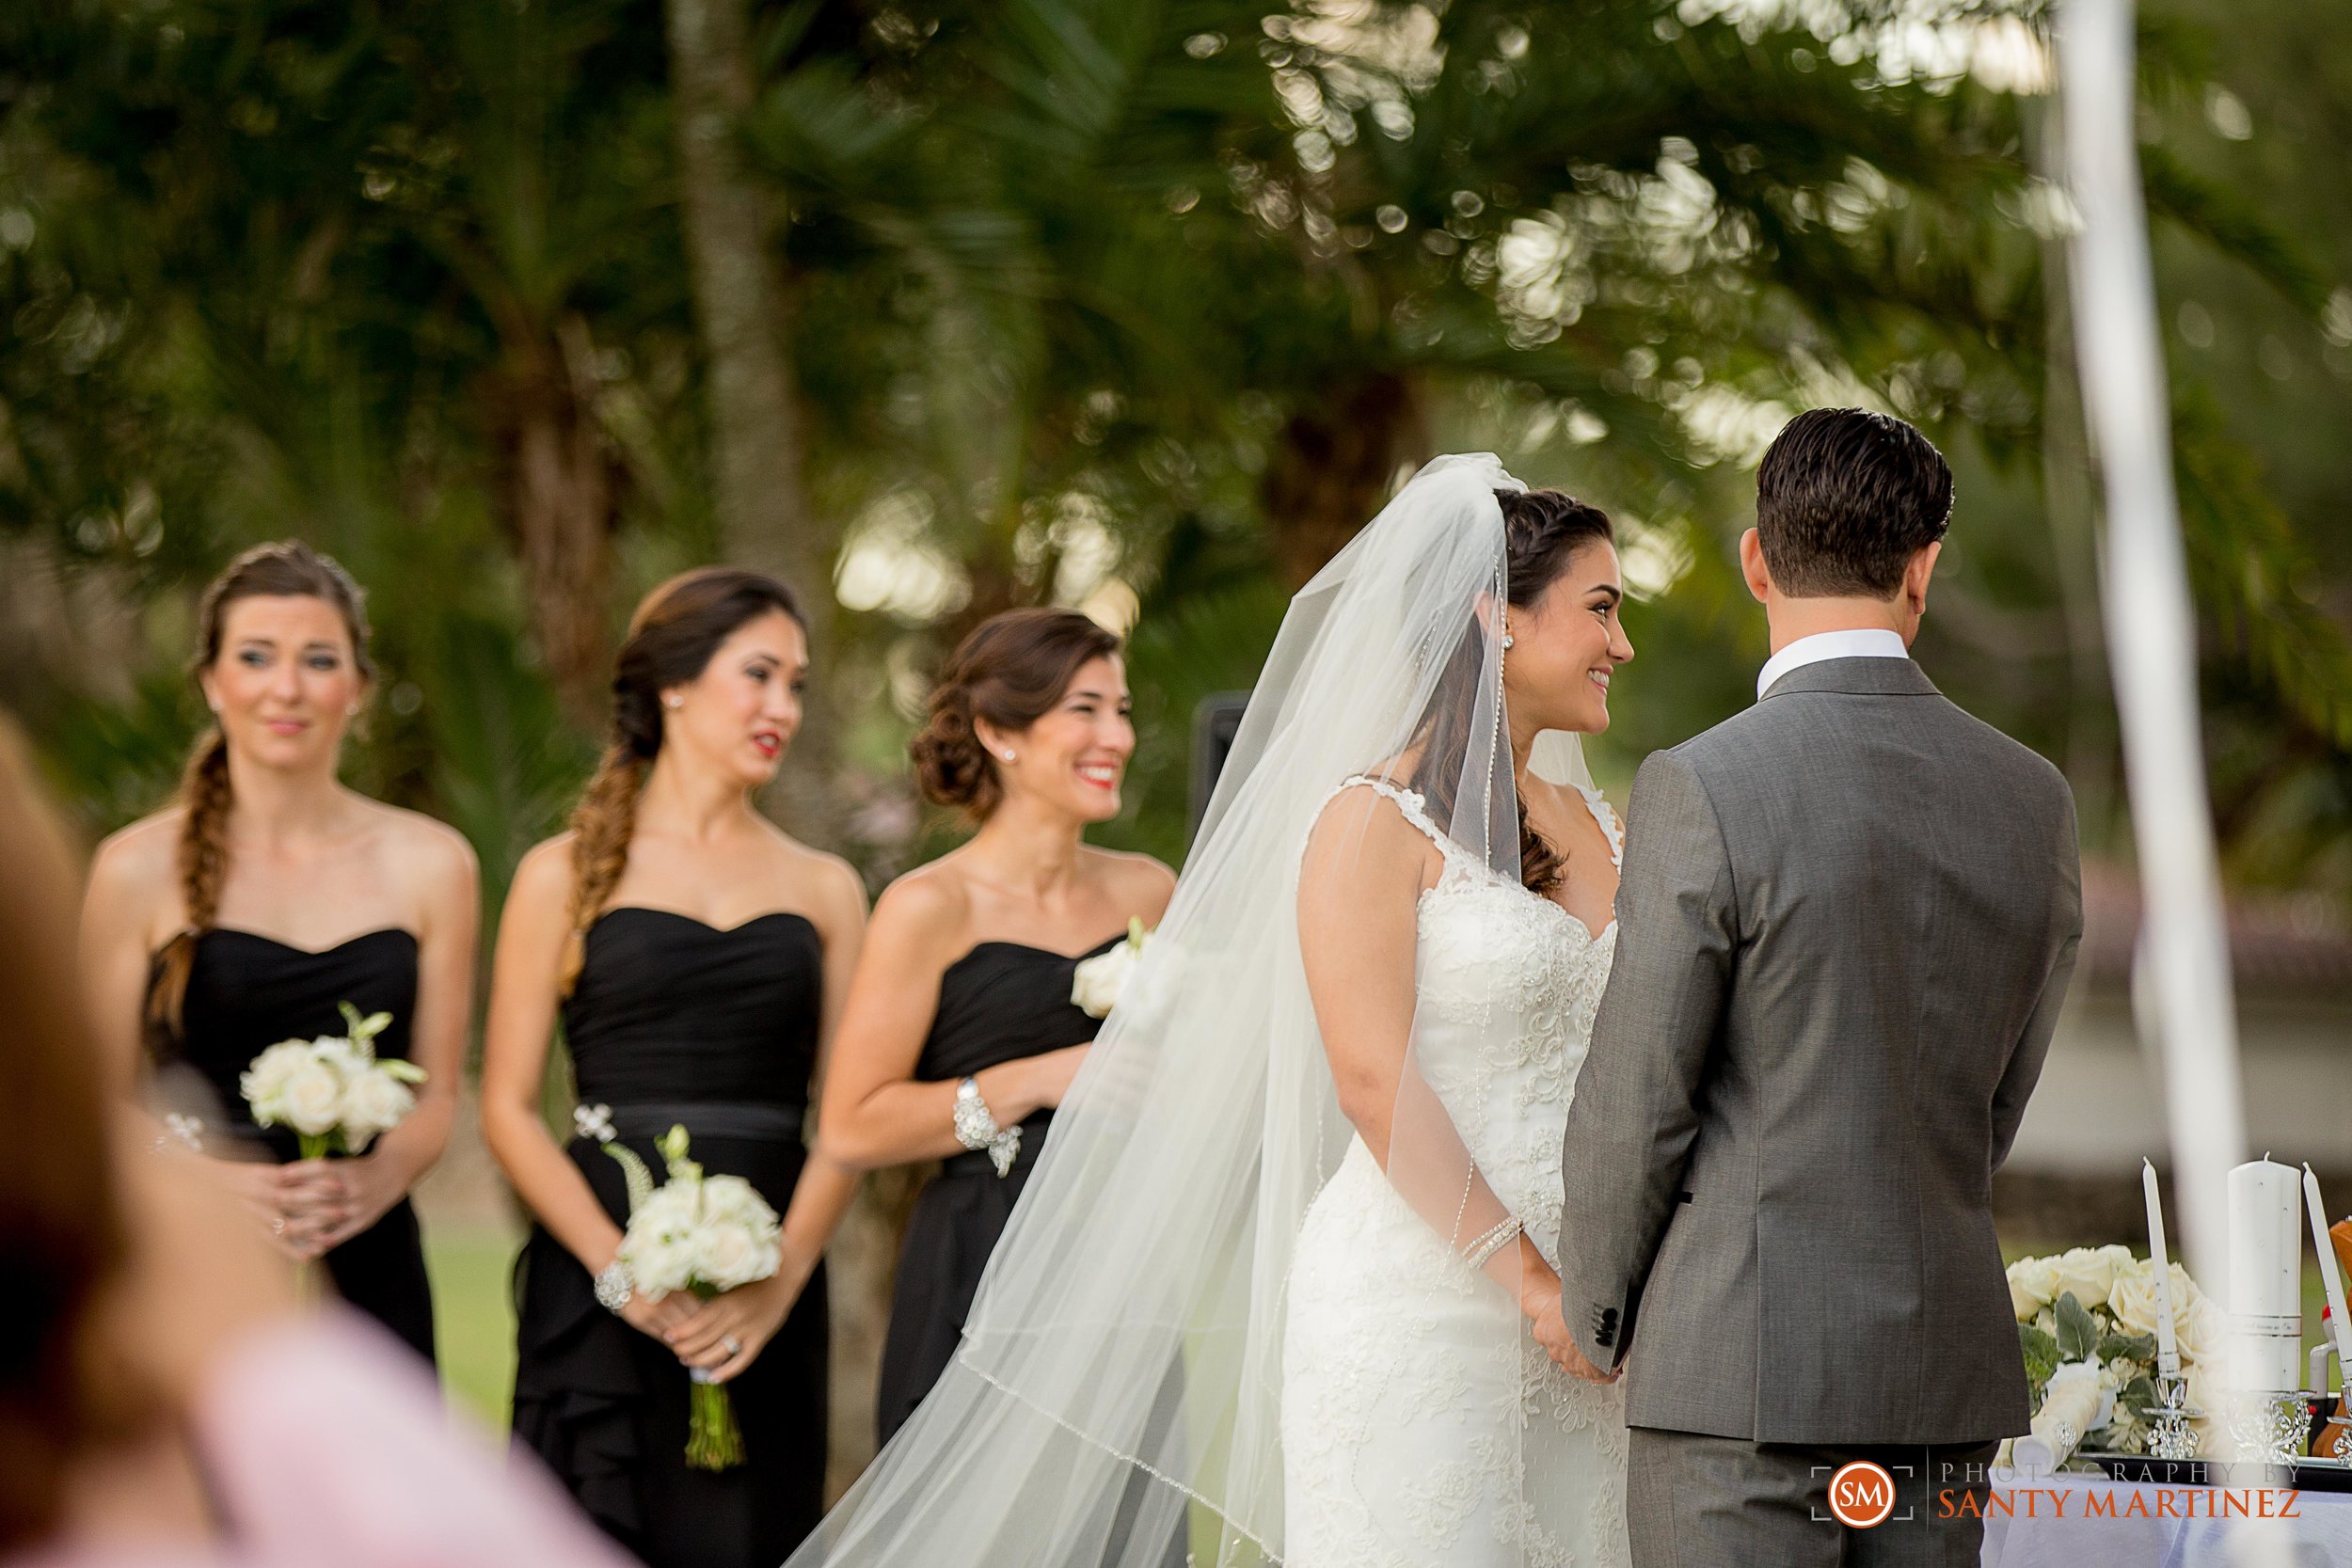 Miami Wedding Photographer - Santy Martinez -11.jpg